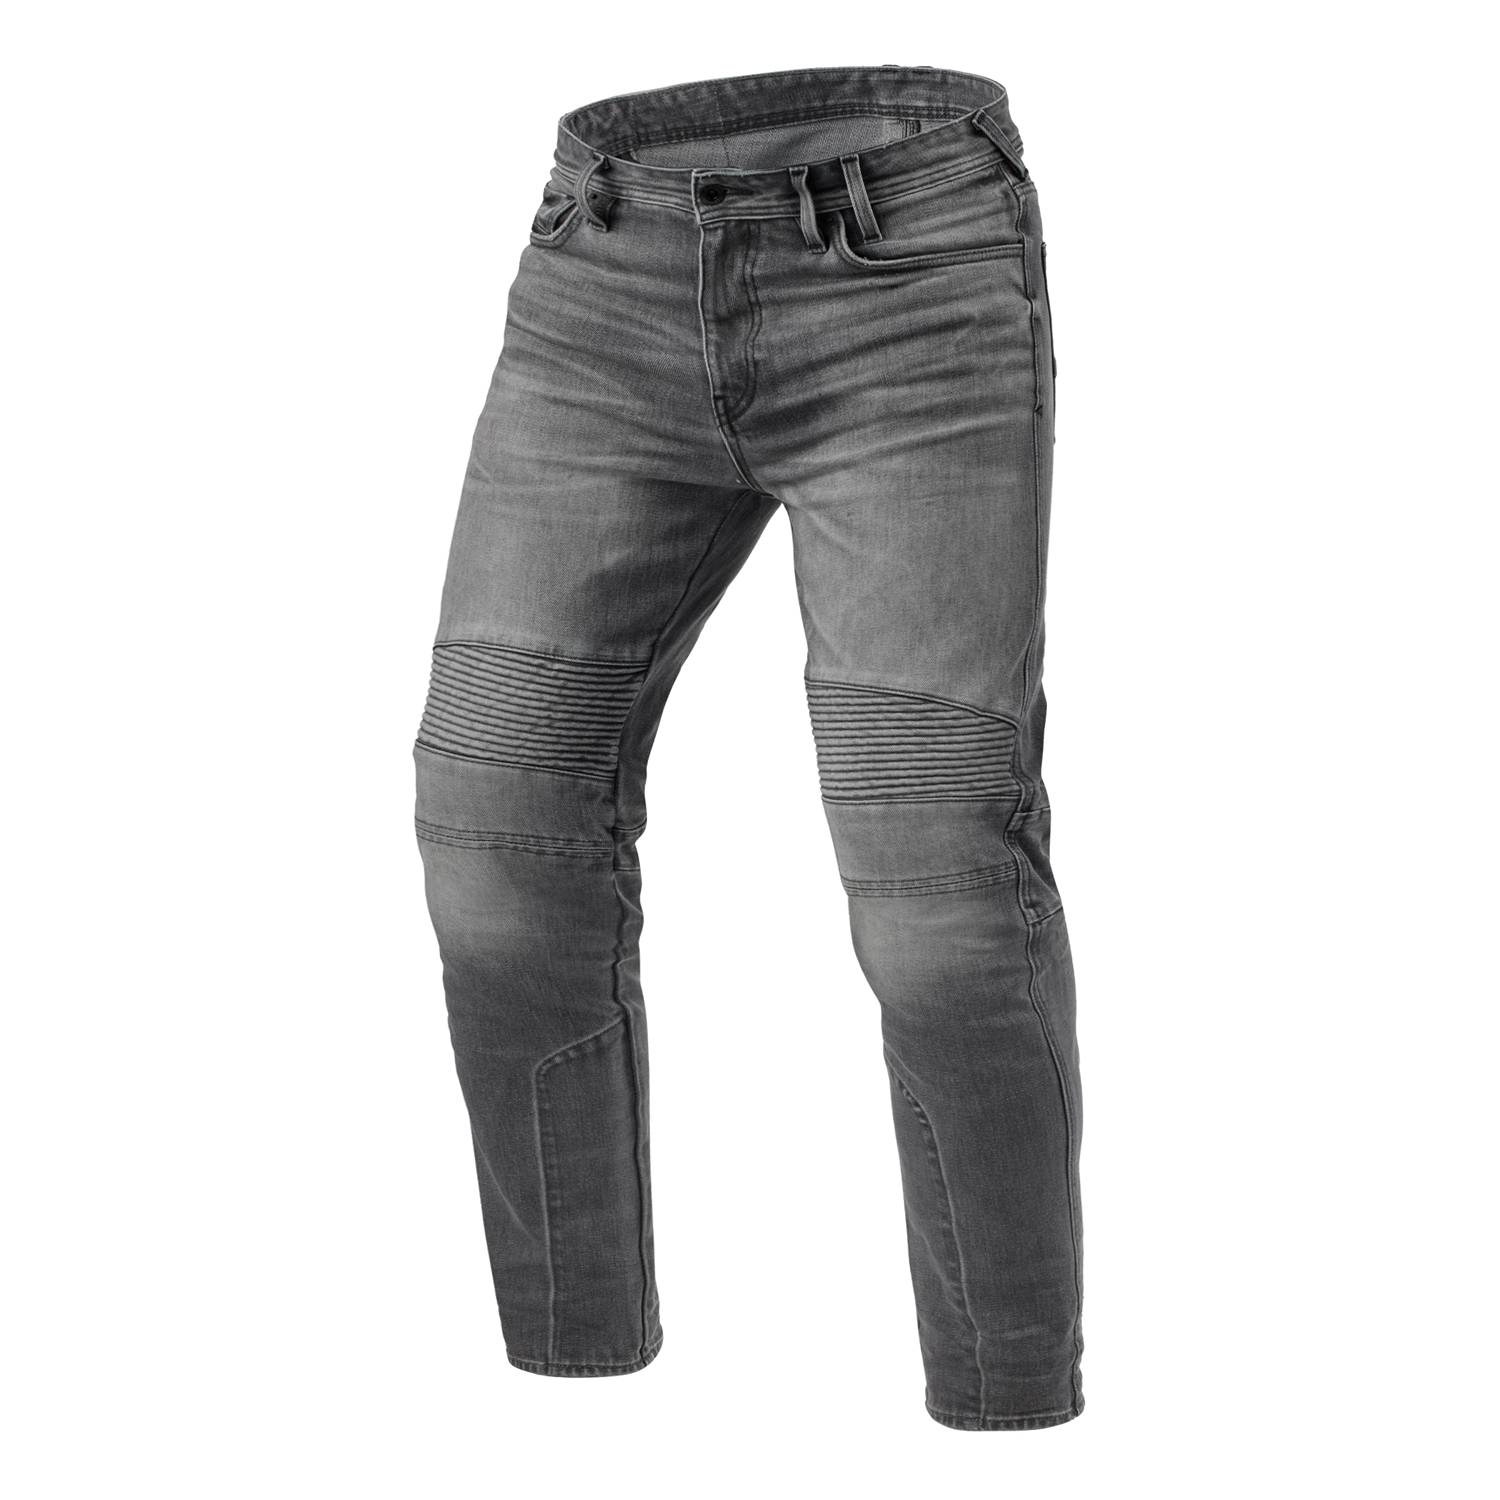 Image of REV'IT! Jeans Moto 2 TF Medium Grey Used L36 Motorcycle Jeans Talla L36/W33